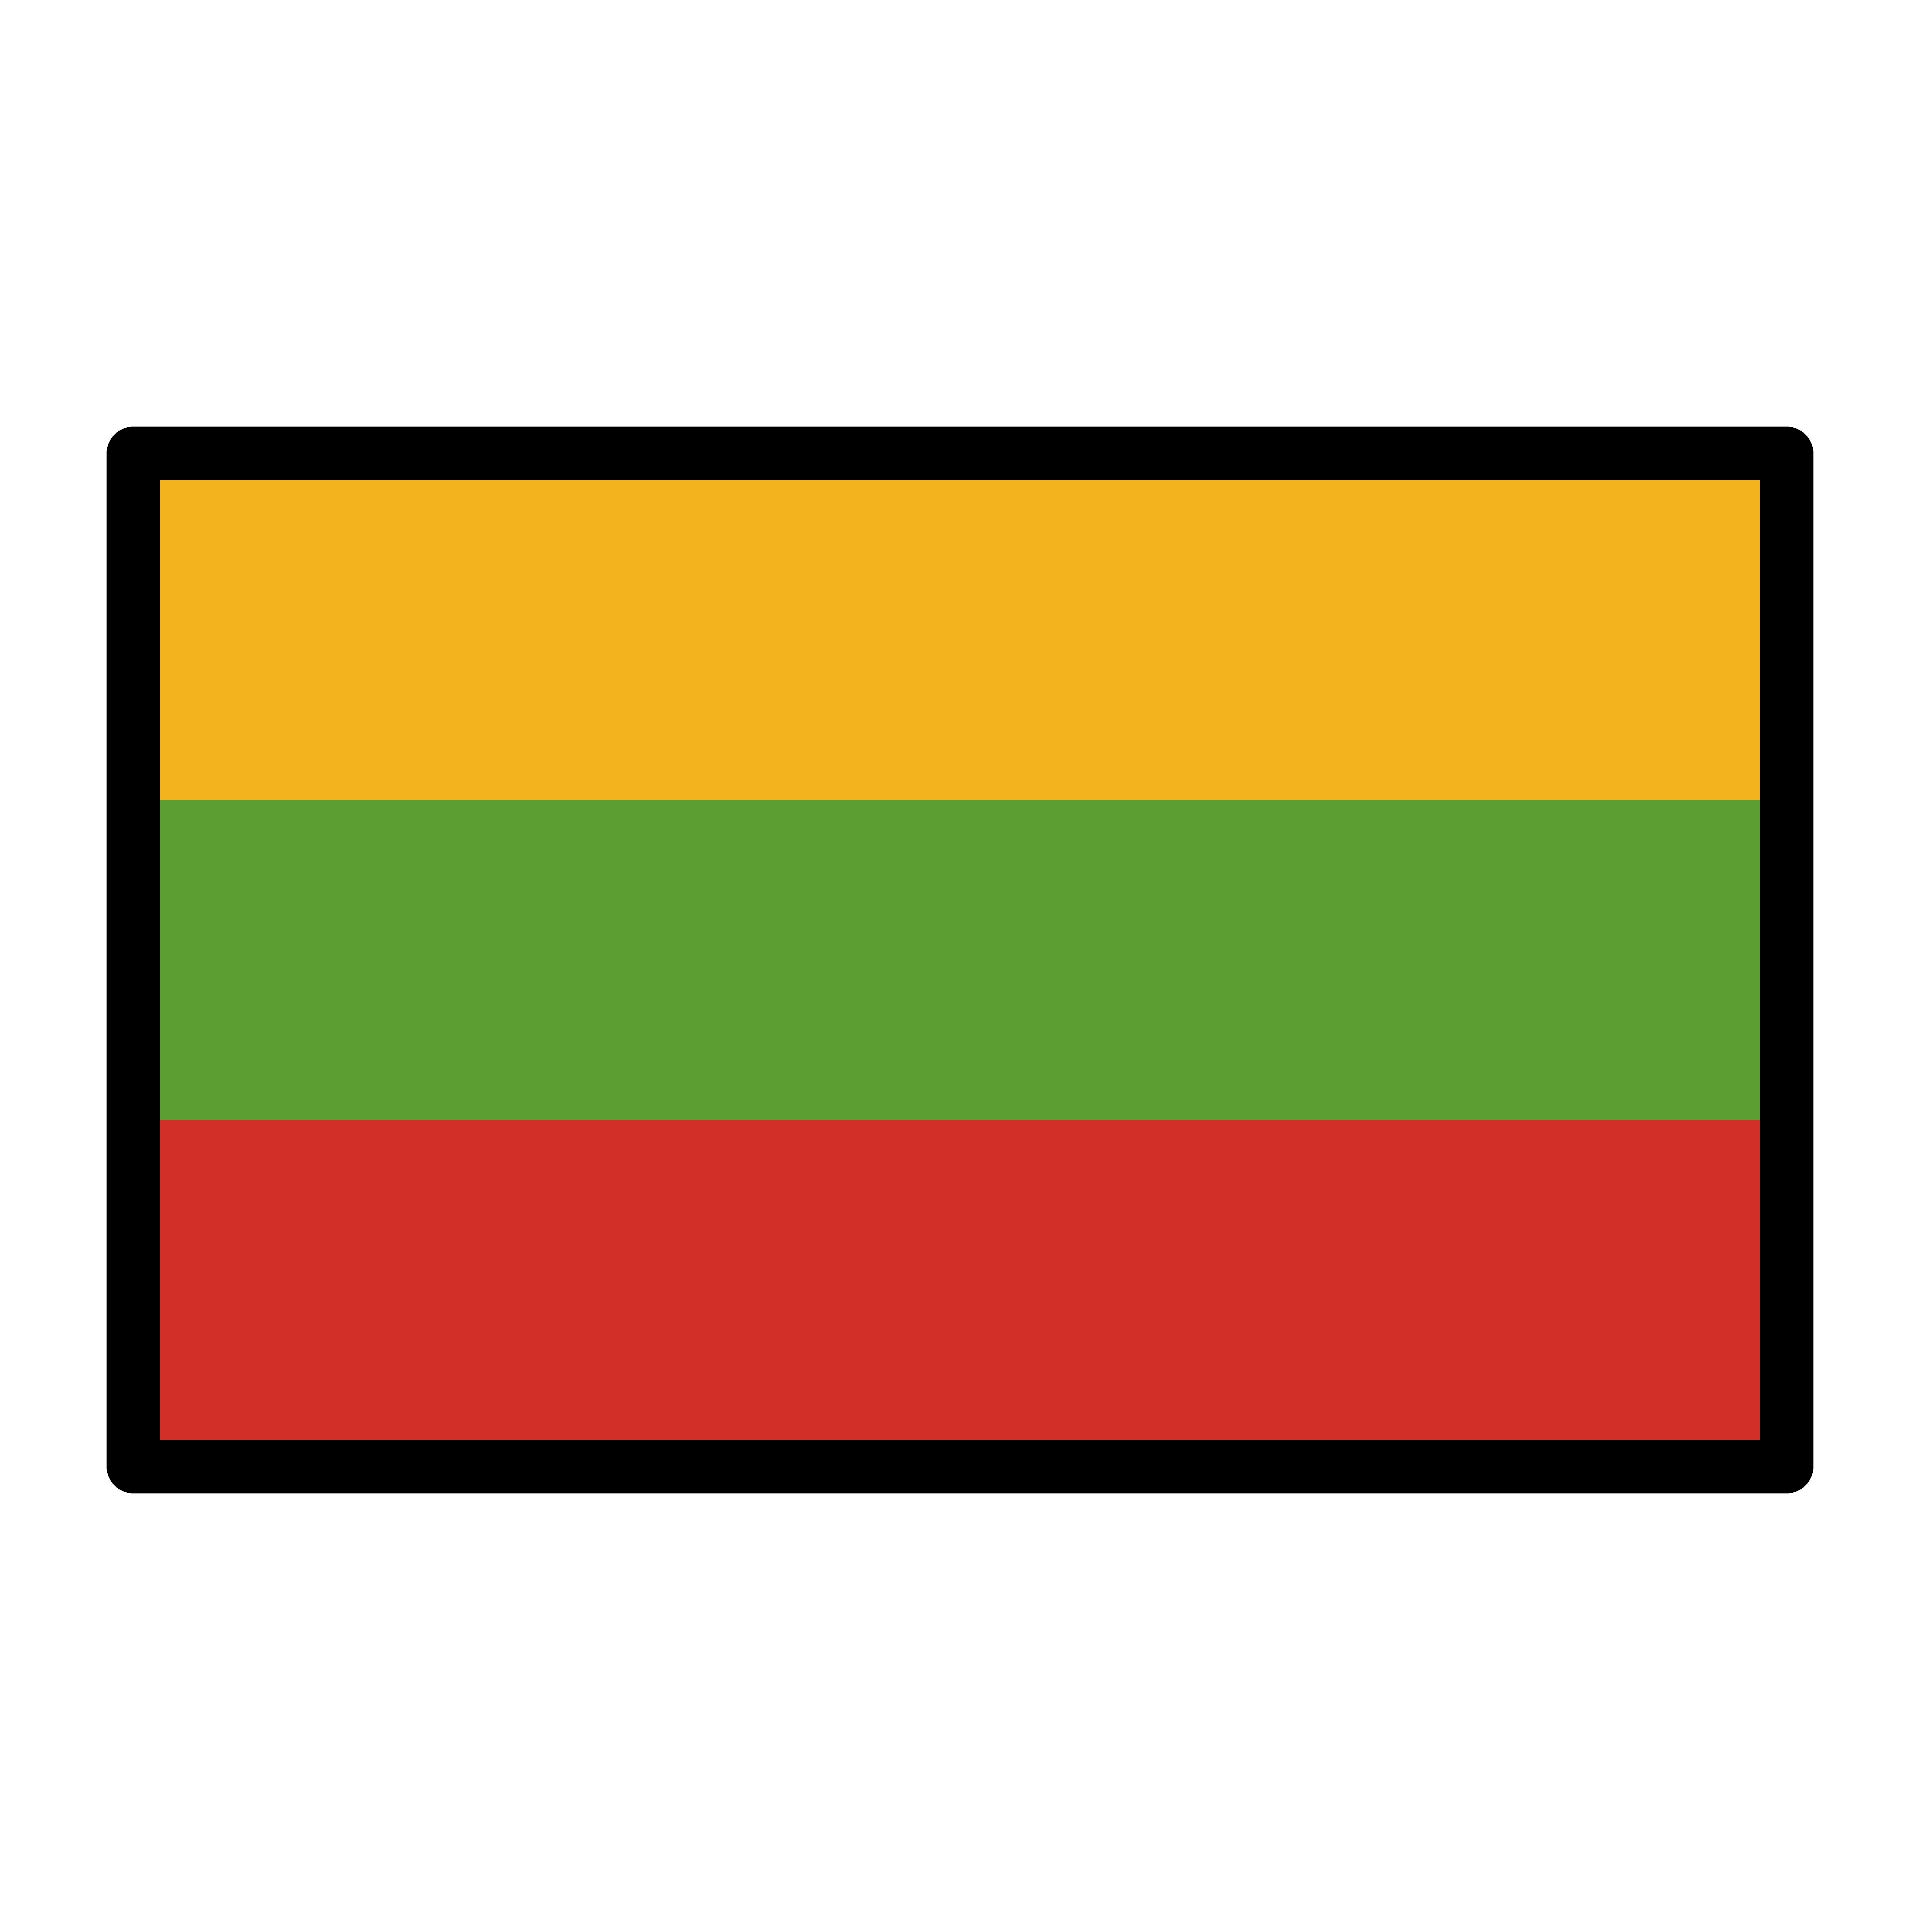 Lithuania Flag PNG Photo Image